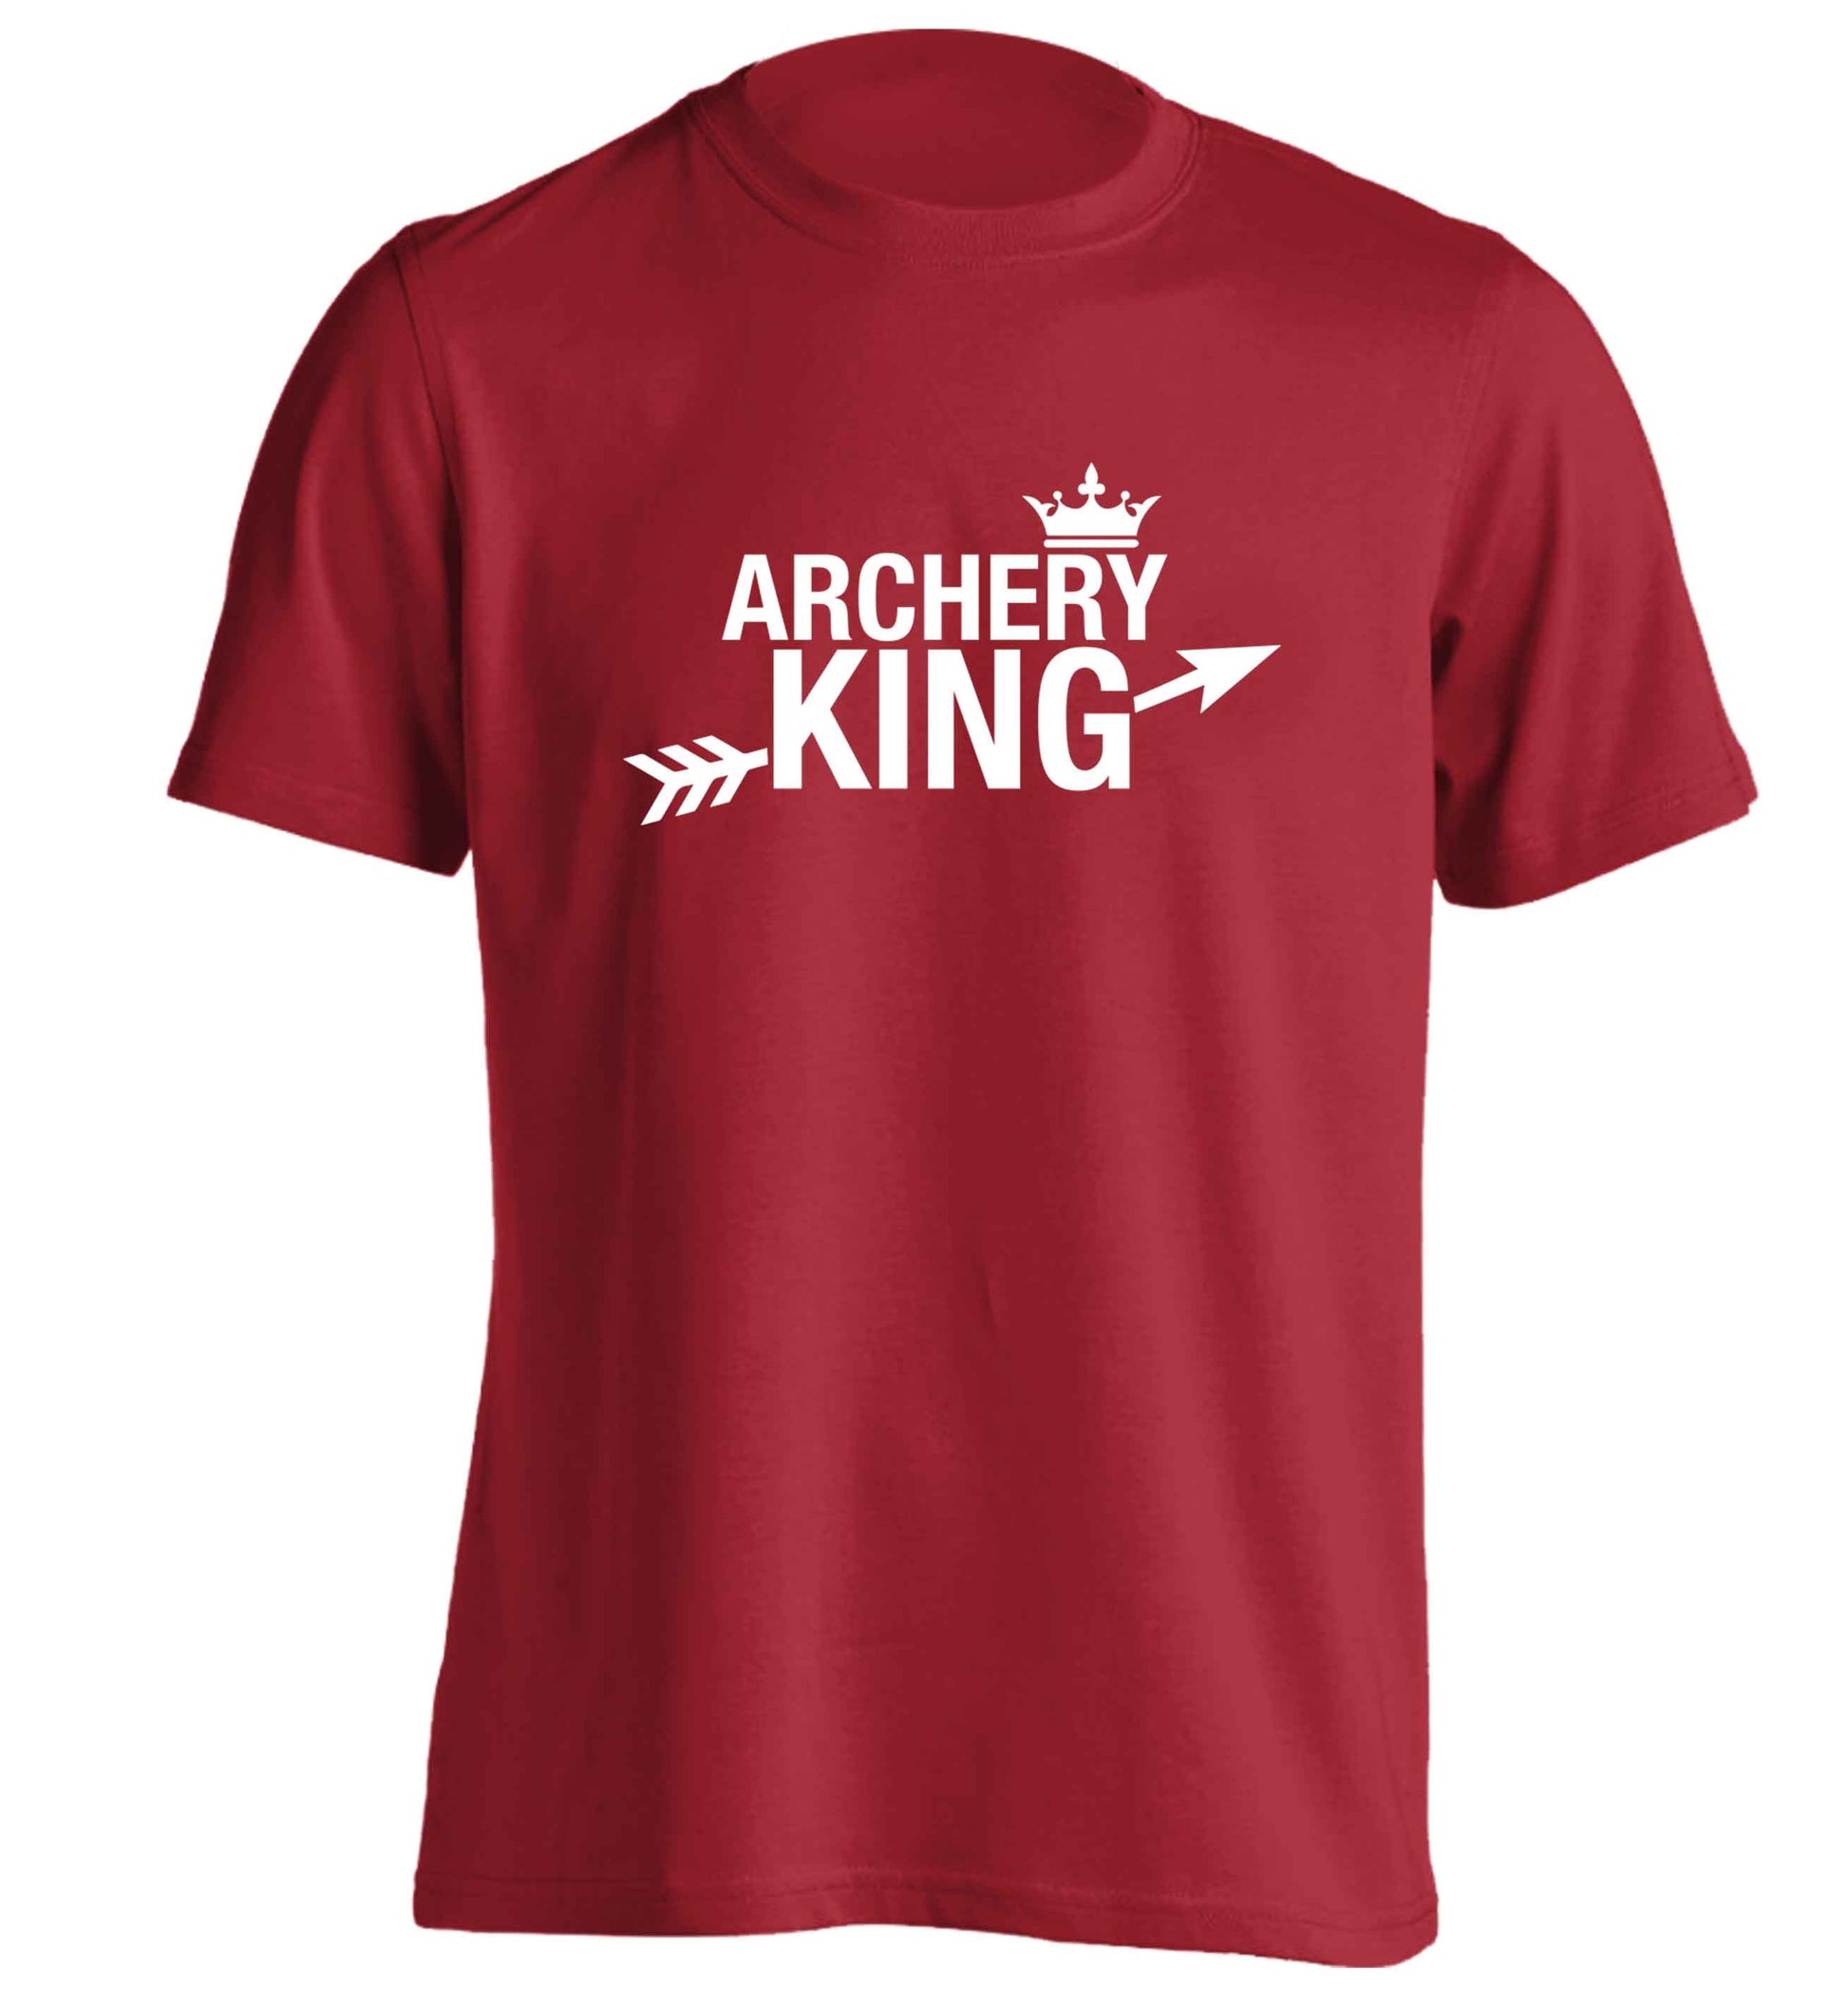 Archery king adults unisex red Tshirt 2XL